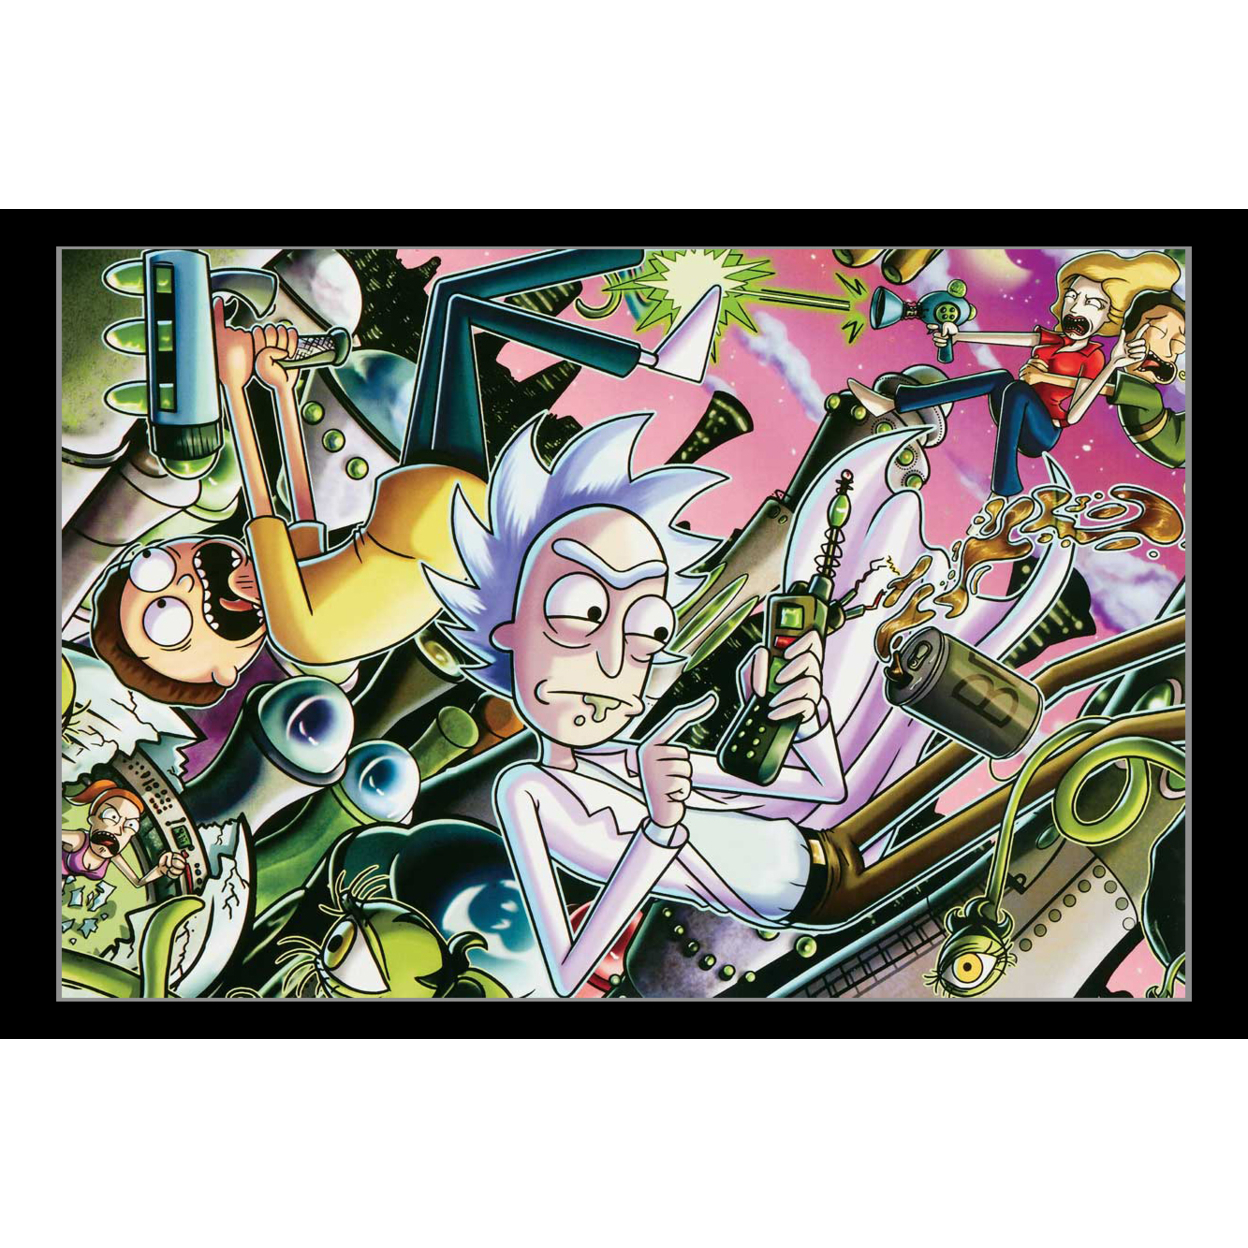 Rick And Morty Chaos Poster Print (36 x 24) | eBay